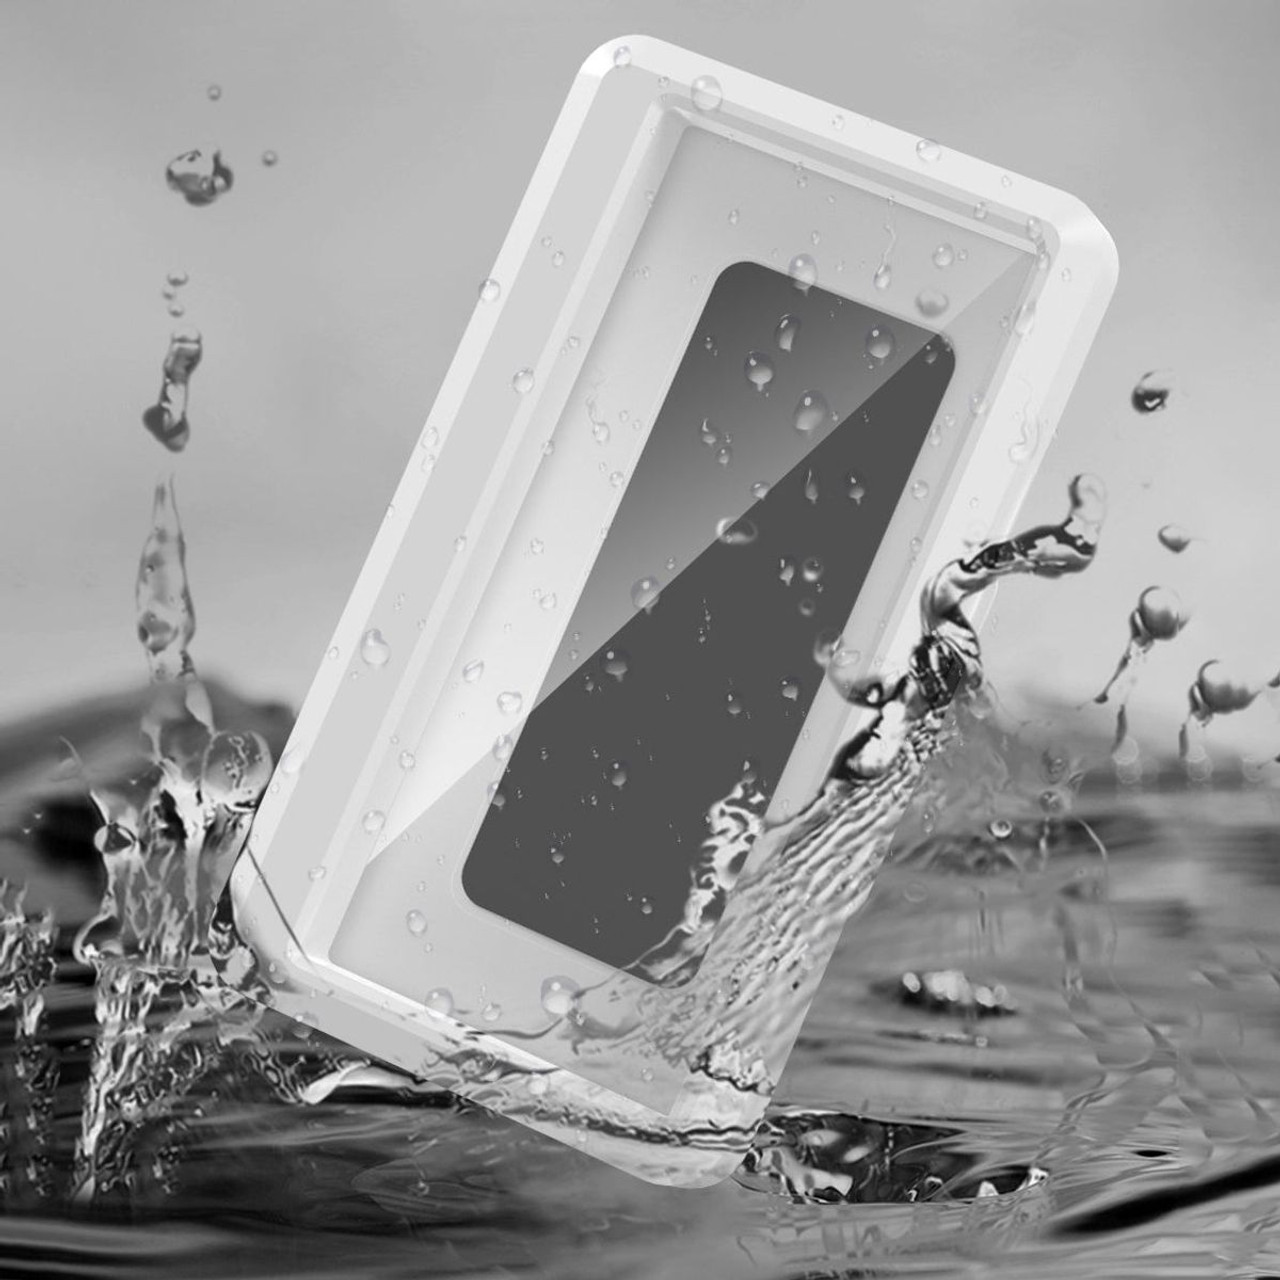 360-Degree Rotating Waterproof Shower Phone Holder product image